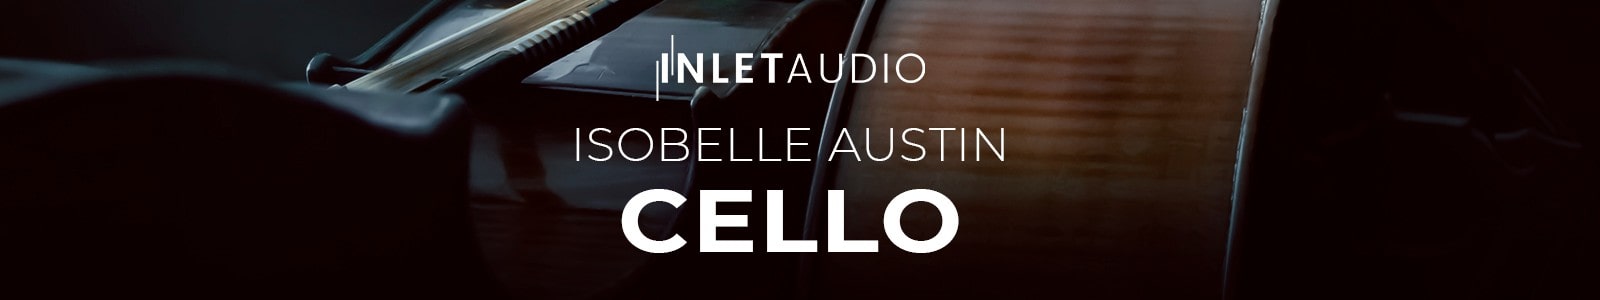 Isobelle’s Cello Collection 1 by Inletaudio